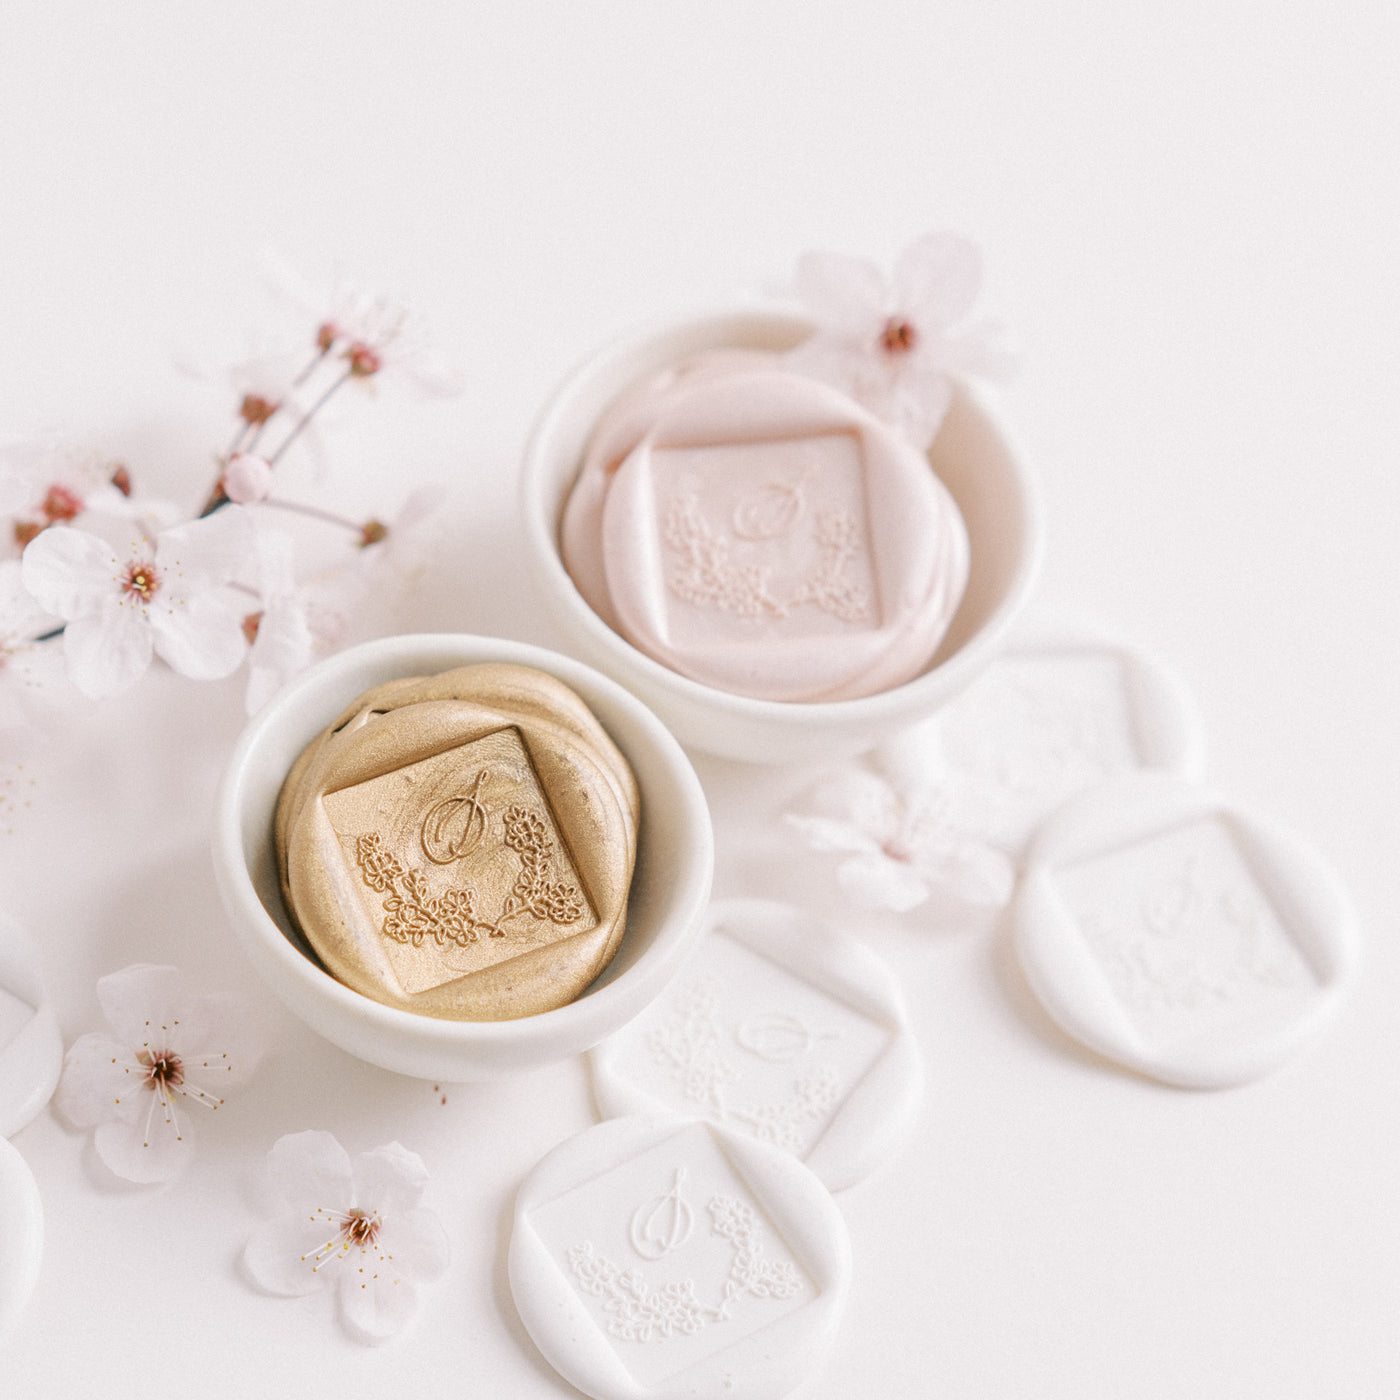 Petal Pink Cherry Blossom Monogram Design | Self-Adhesive Wax Seals Embosser & Rubber Stamp | 'Sakura' Cherry Blossom Embellishments for Blush Pink Spring Wedding | Heirloom Seals